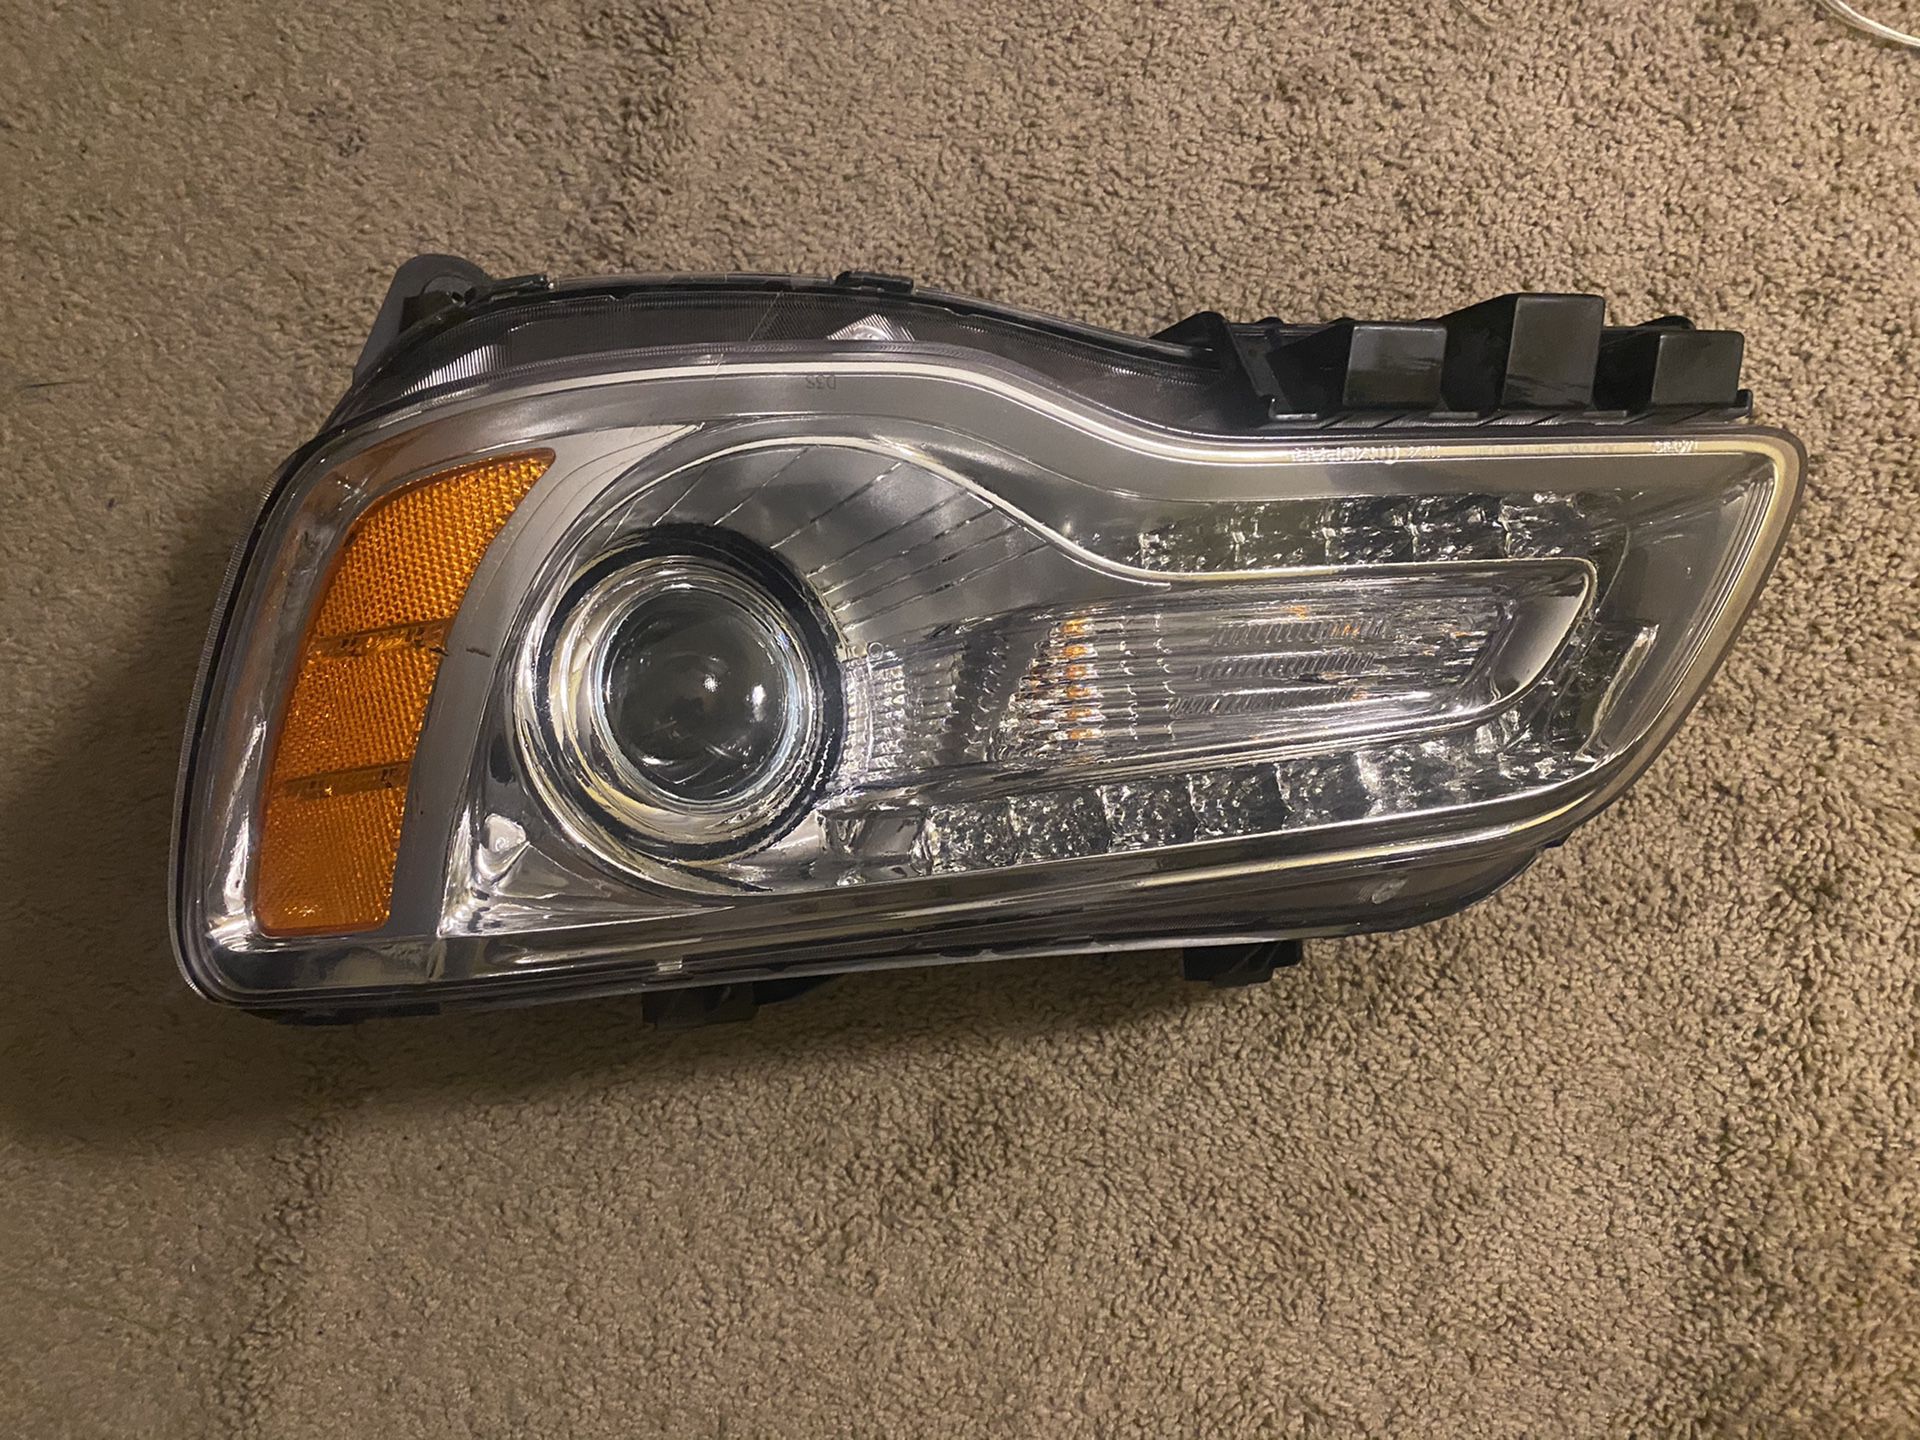 Hid headlight Chrysler 300